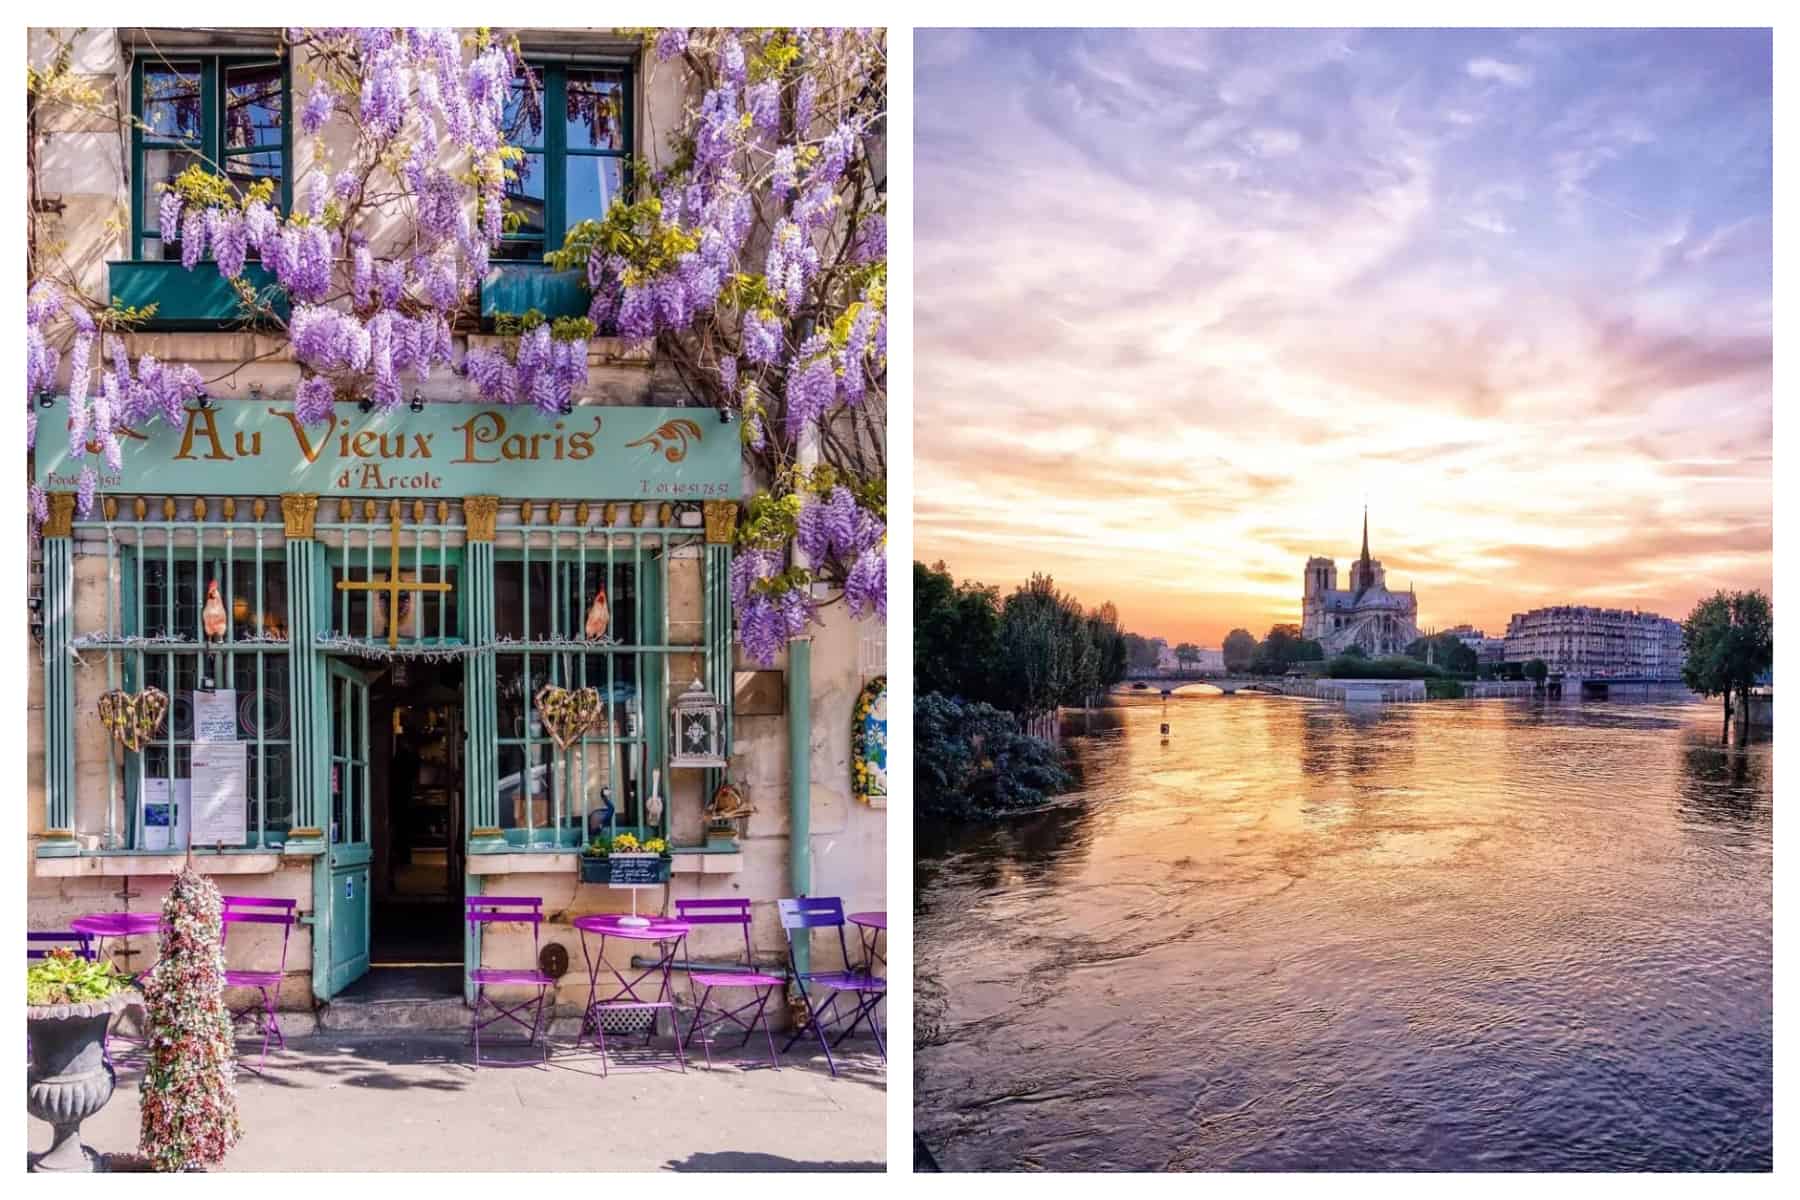 Left: The front of the Cafe Au Vieux Paris d'Arcole is covered in purple wisteria. Right: The Ile de la Cite is lit up by a purple and orange sunset.